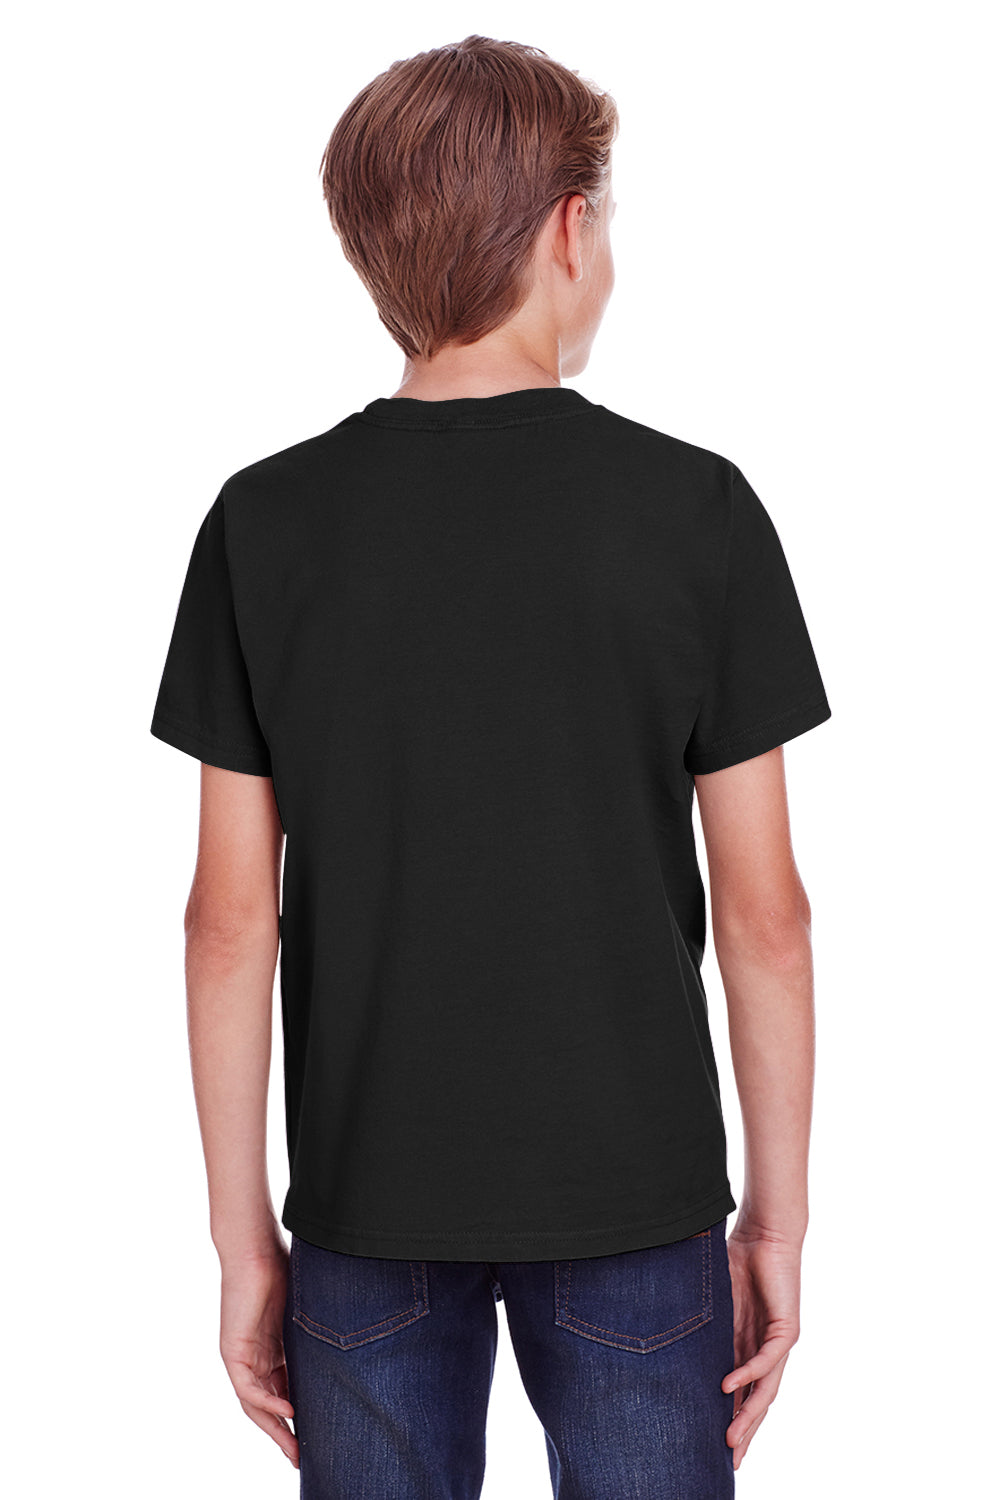 ComfortWash by Hanes GDH175 Youth Short Sleeve Crewneck T-Shirt Black Back